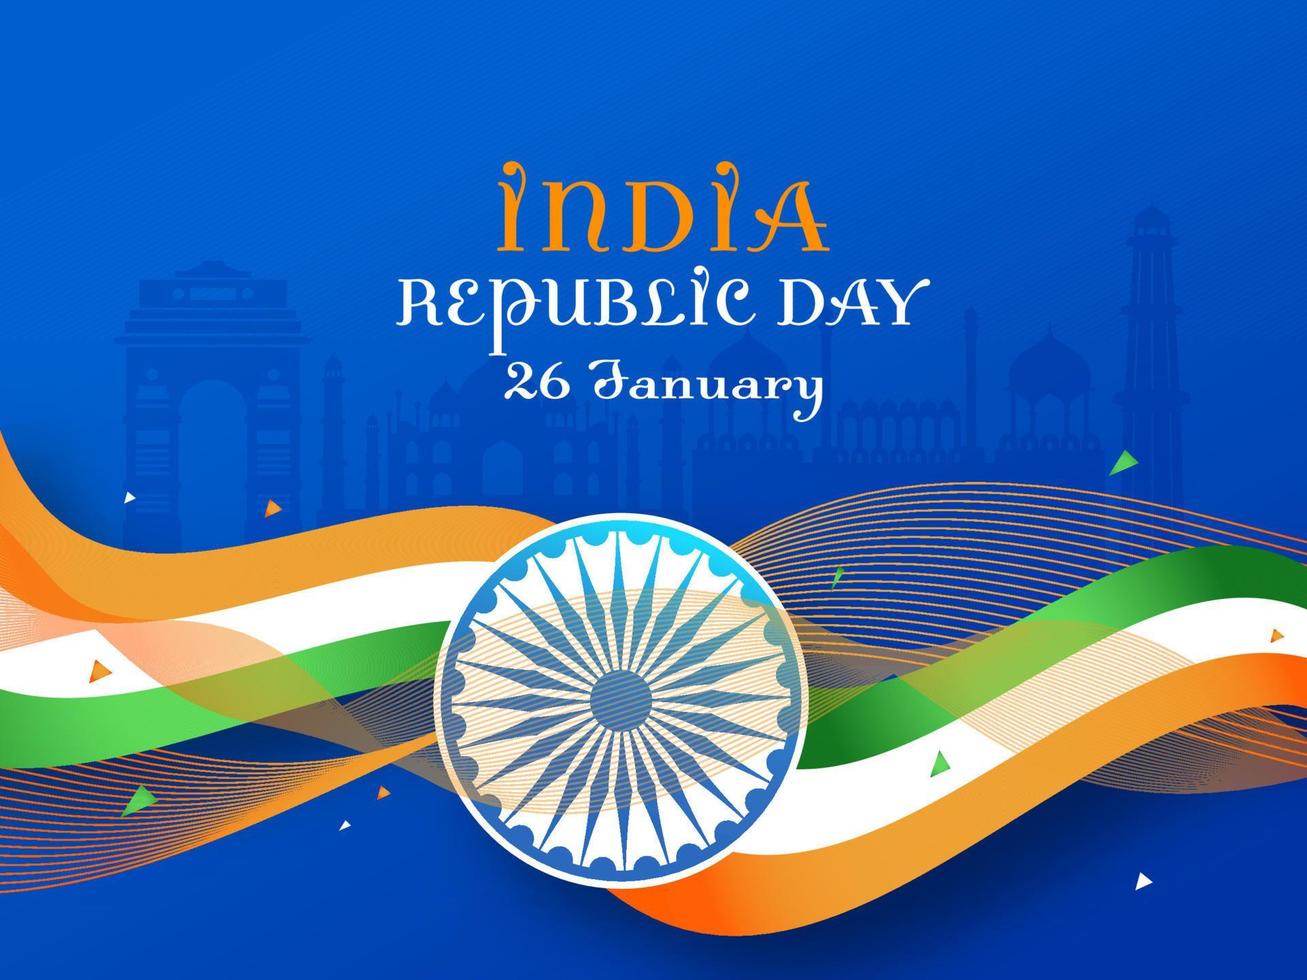 India república día concepto con ashoka rueda, tricolor cinta y ondulado líneas en famoso monumentos azul antecedentes. vector